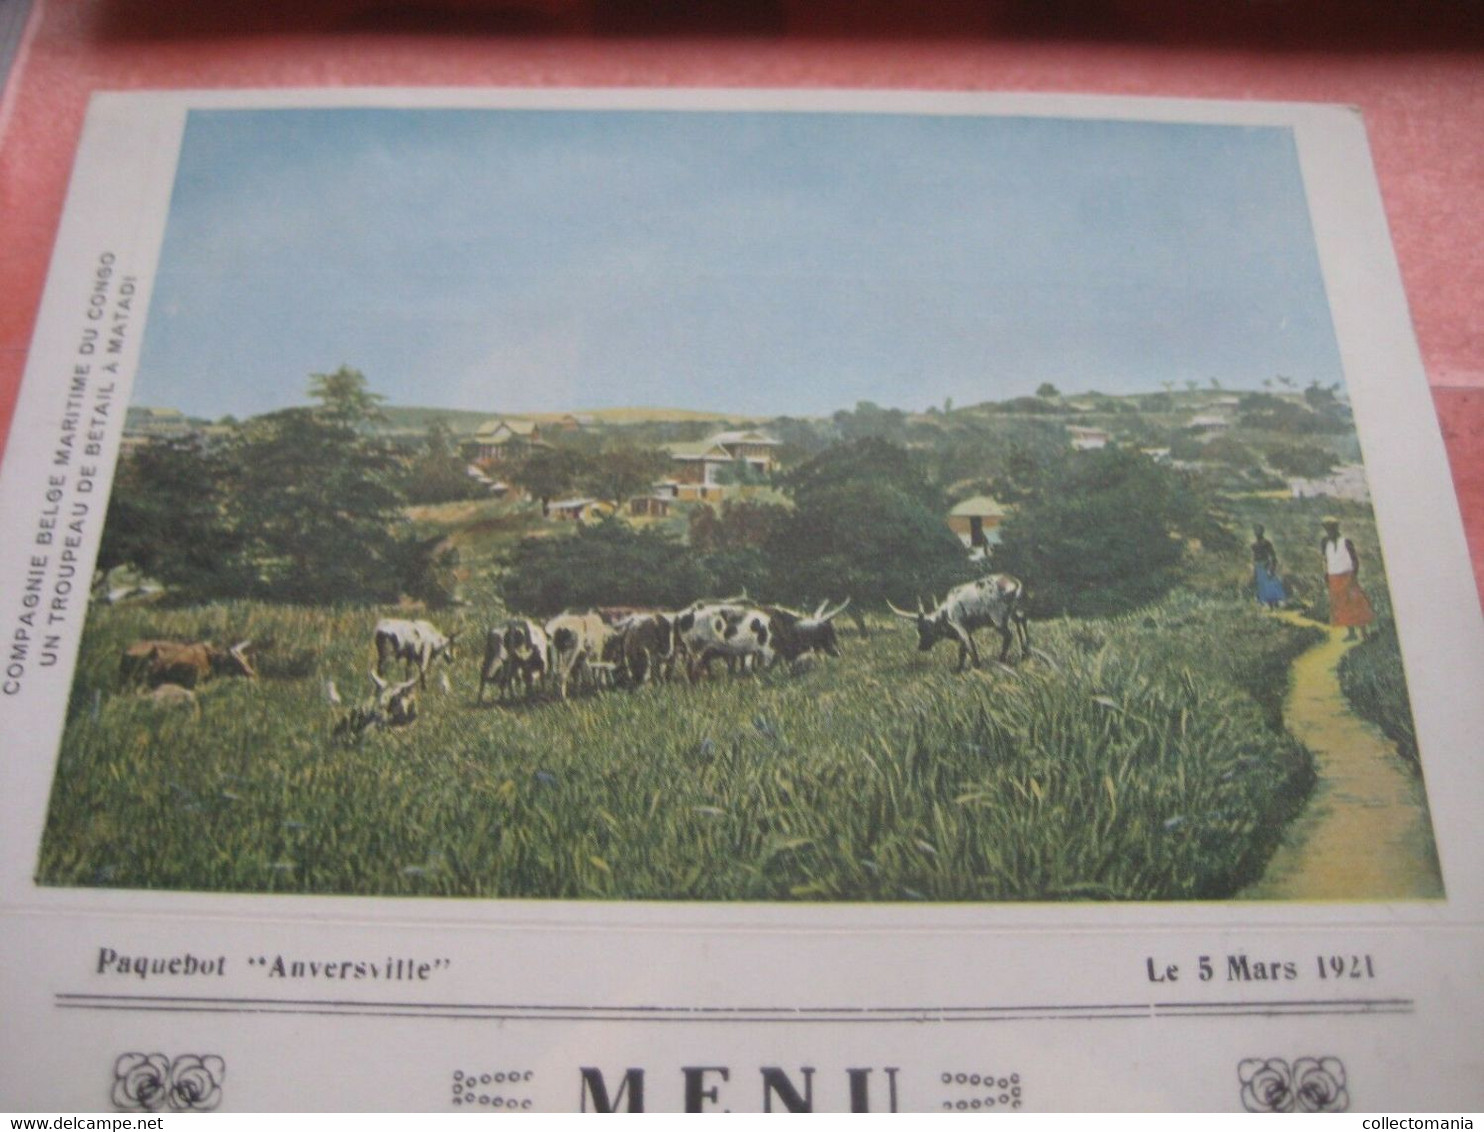 Authentic Menu Card, 1921 Congo Boat ANVERSVILLE, 20cmX13,8cm, MATADI Cows VG -  5 March 1921   DEJEUNER = Breakfast - Menú